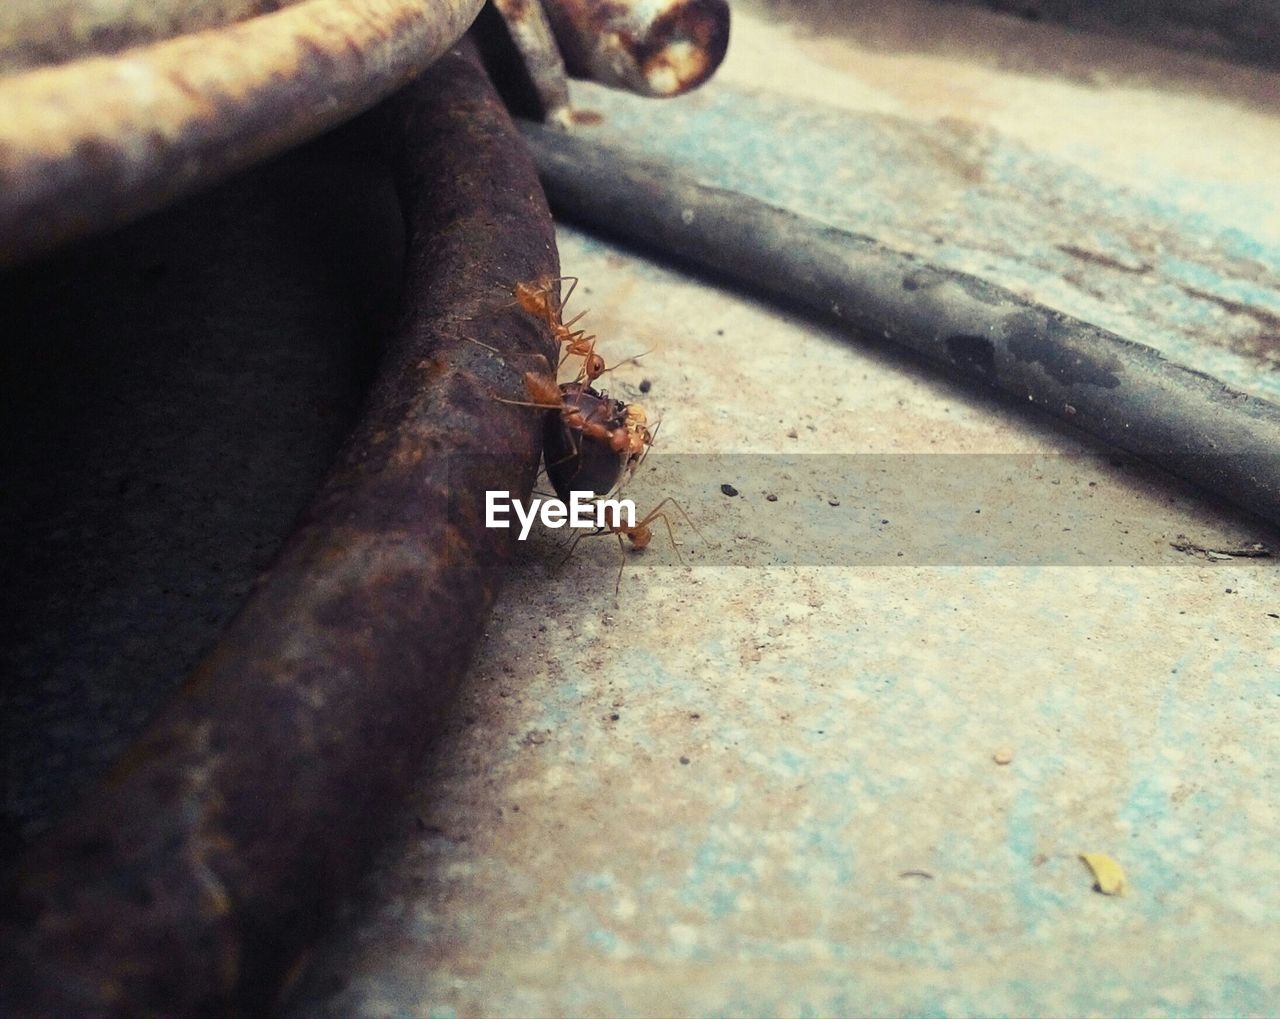 Ants on rusty metal